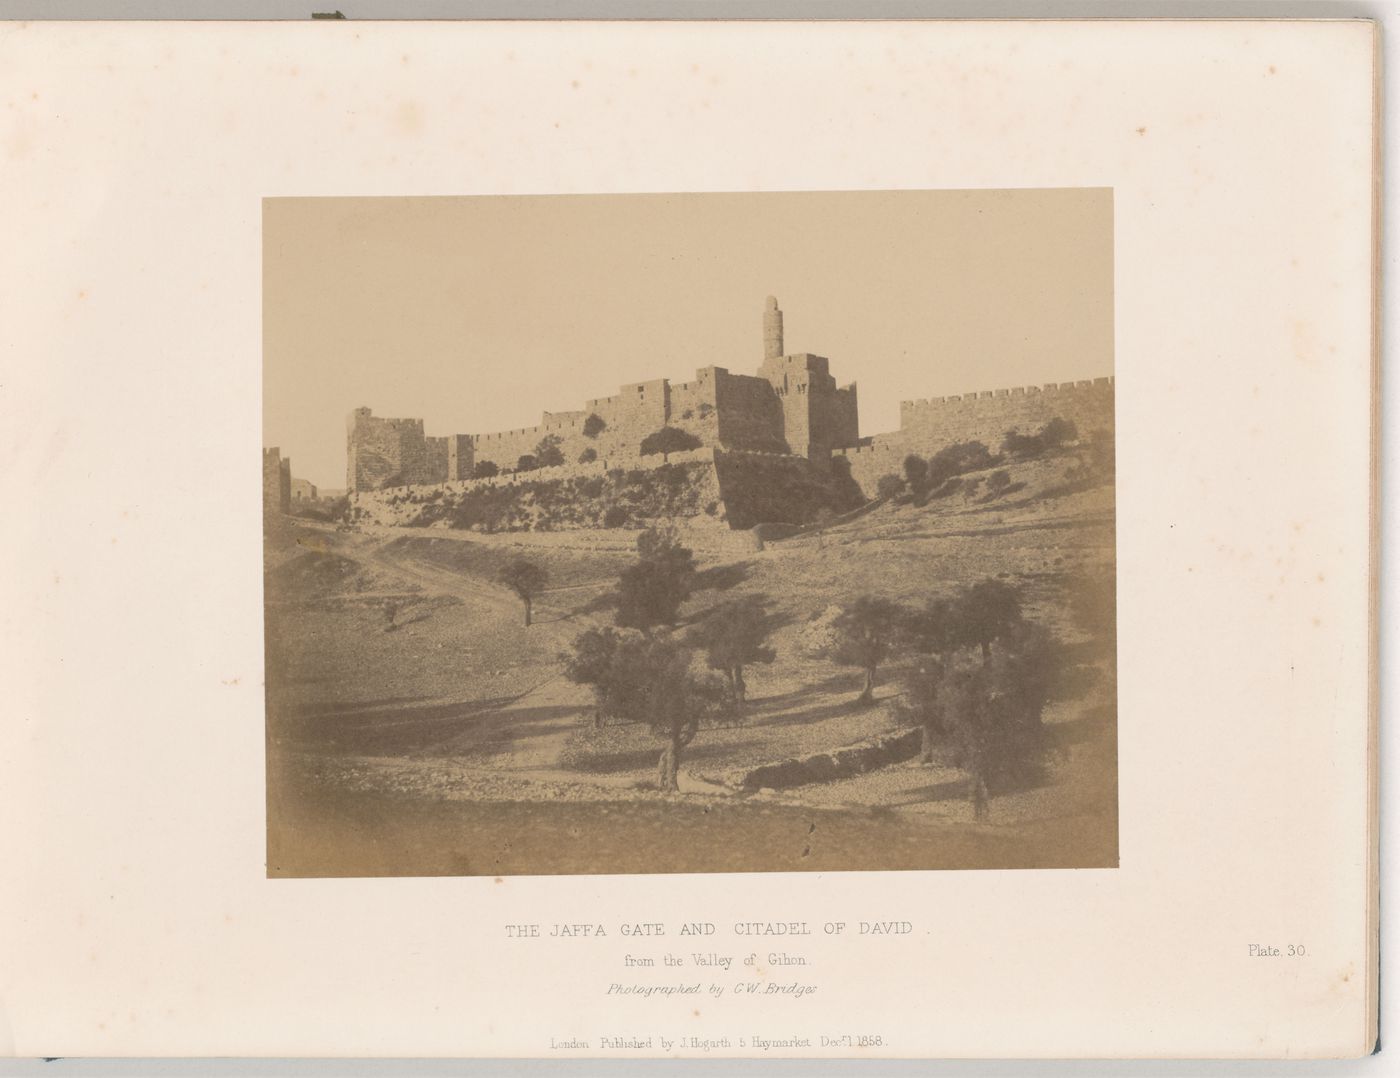 The Jaffa Gate and Citadel of David